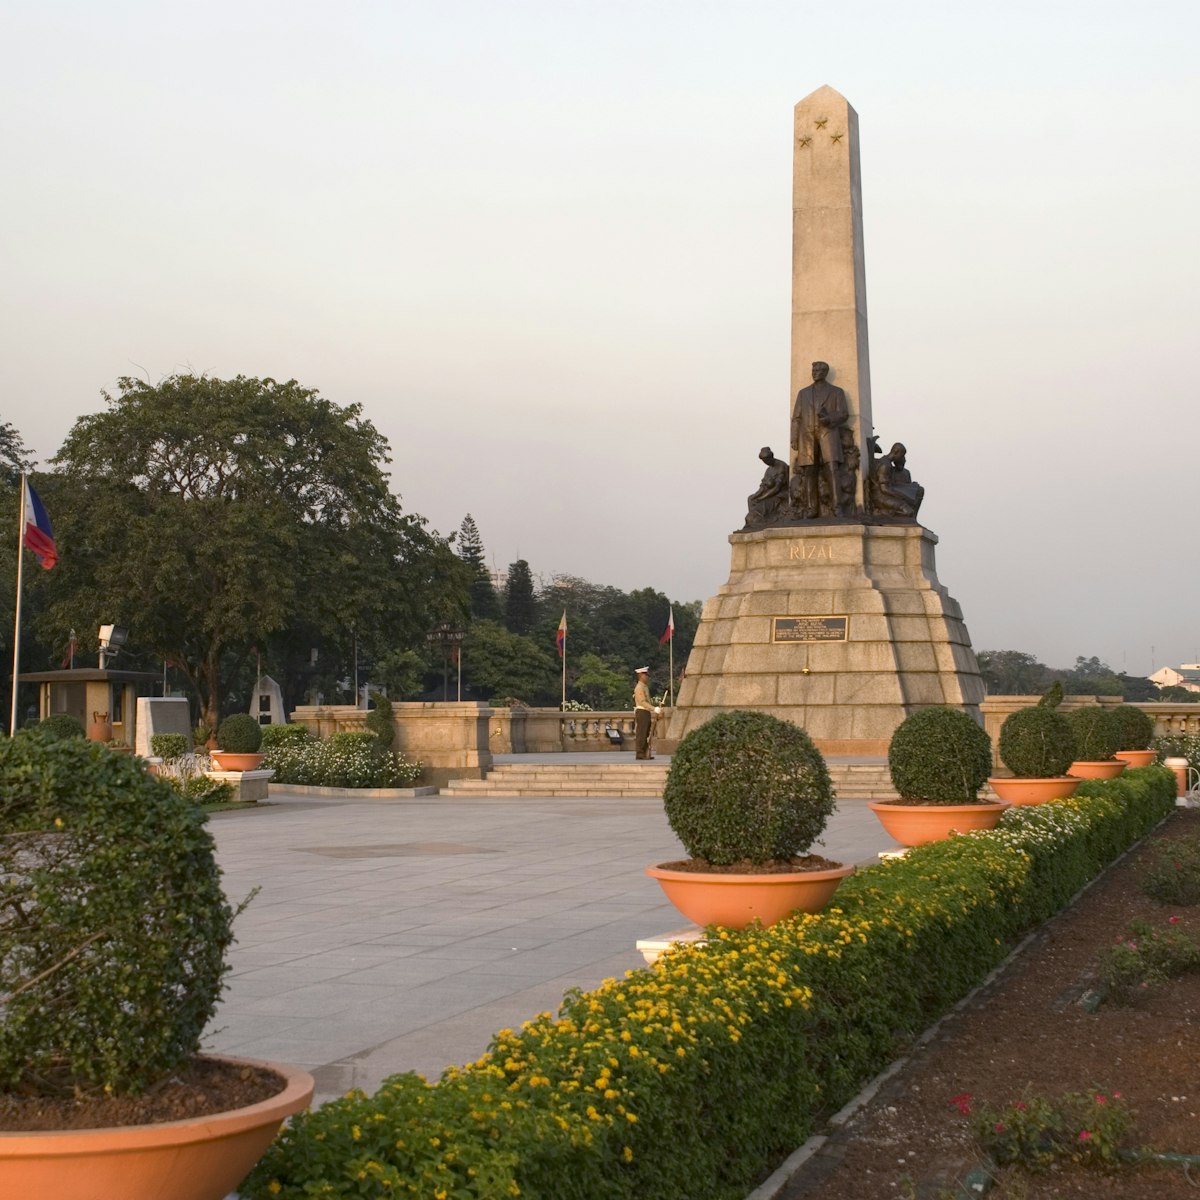 Rizal Monument in Rizal Park.